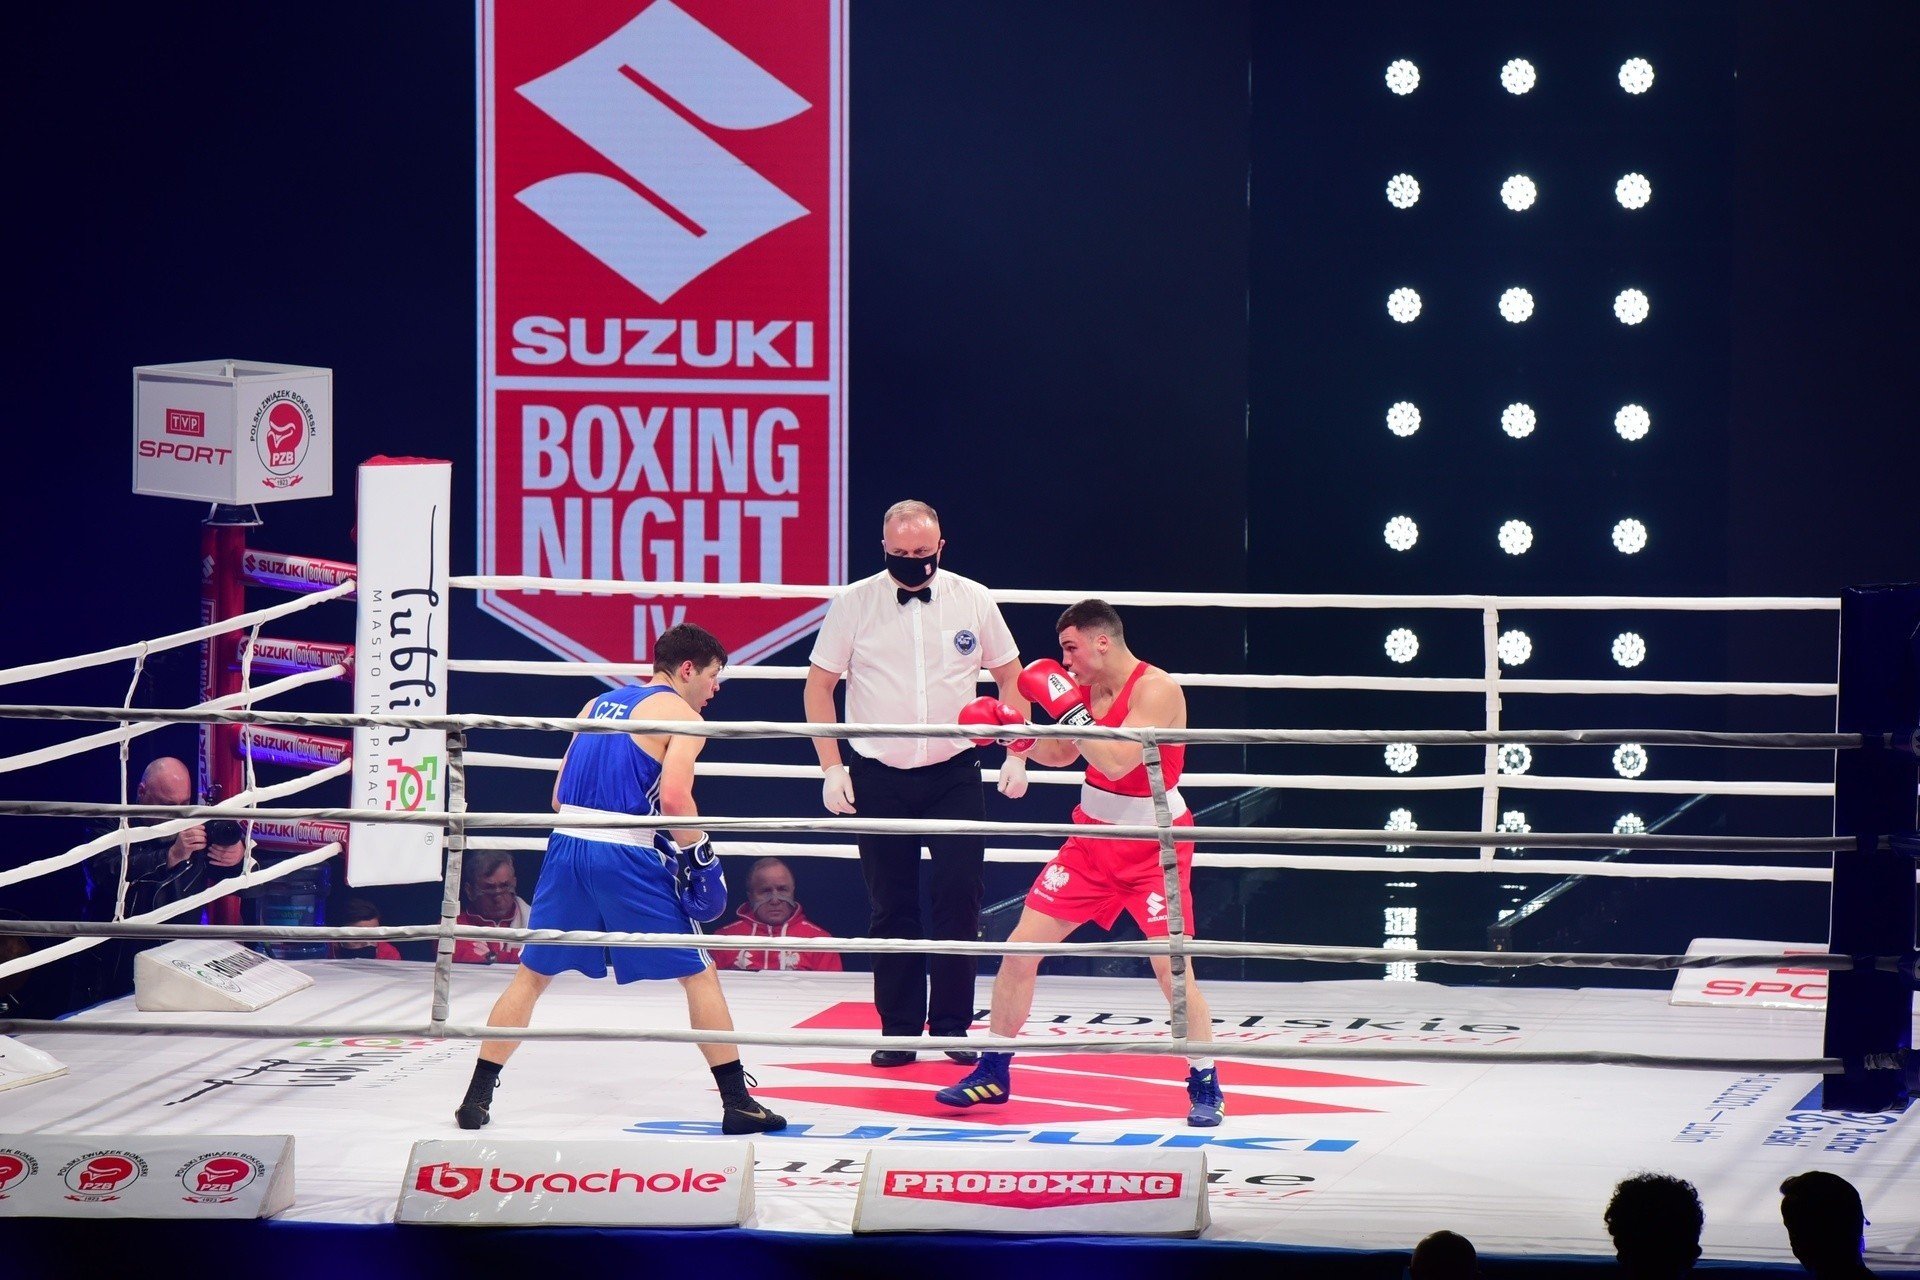 Piąta edycja gali boksu olimpijskiego, Suzuki Boxing Night